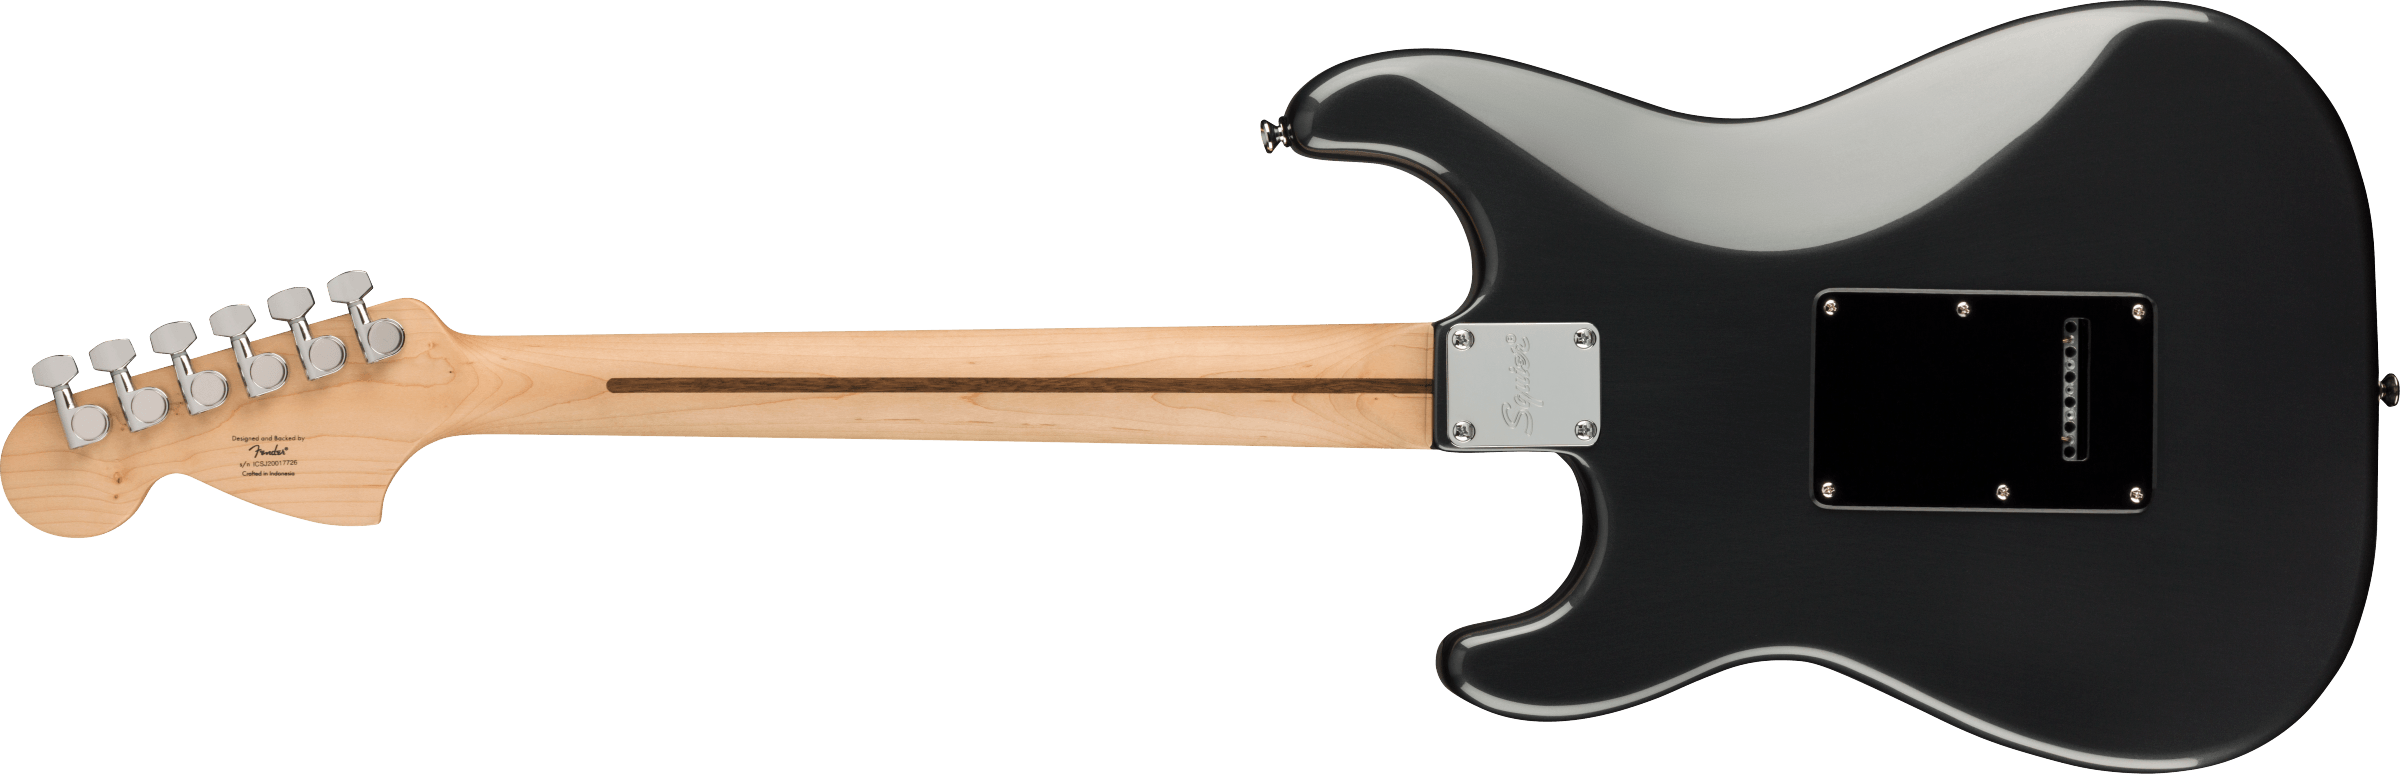 Squier Strat Affinity Hss Pack +fender Frontman 15g 2021 Trem Lau - Charcoal Frost Metallic - Elektrische gitaar set - Variation 2